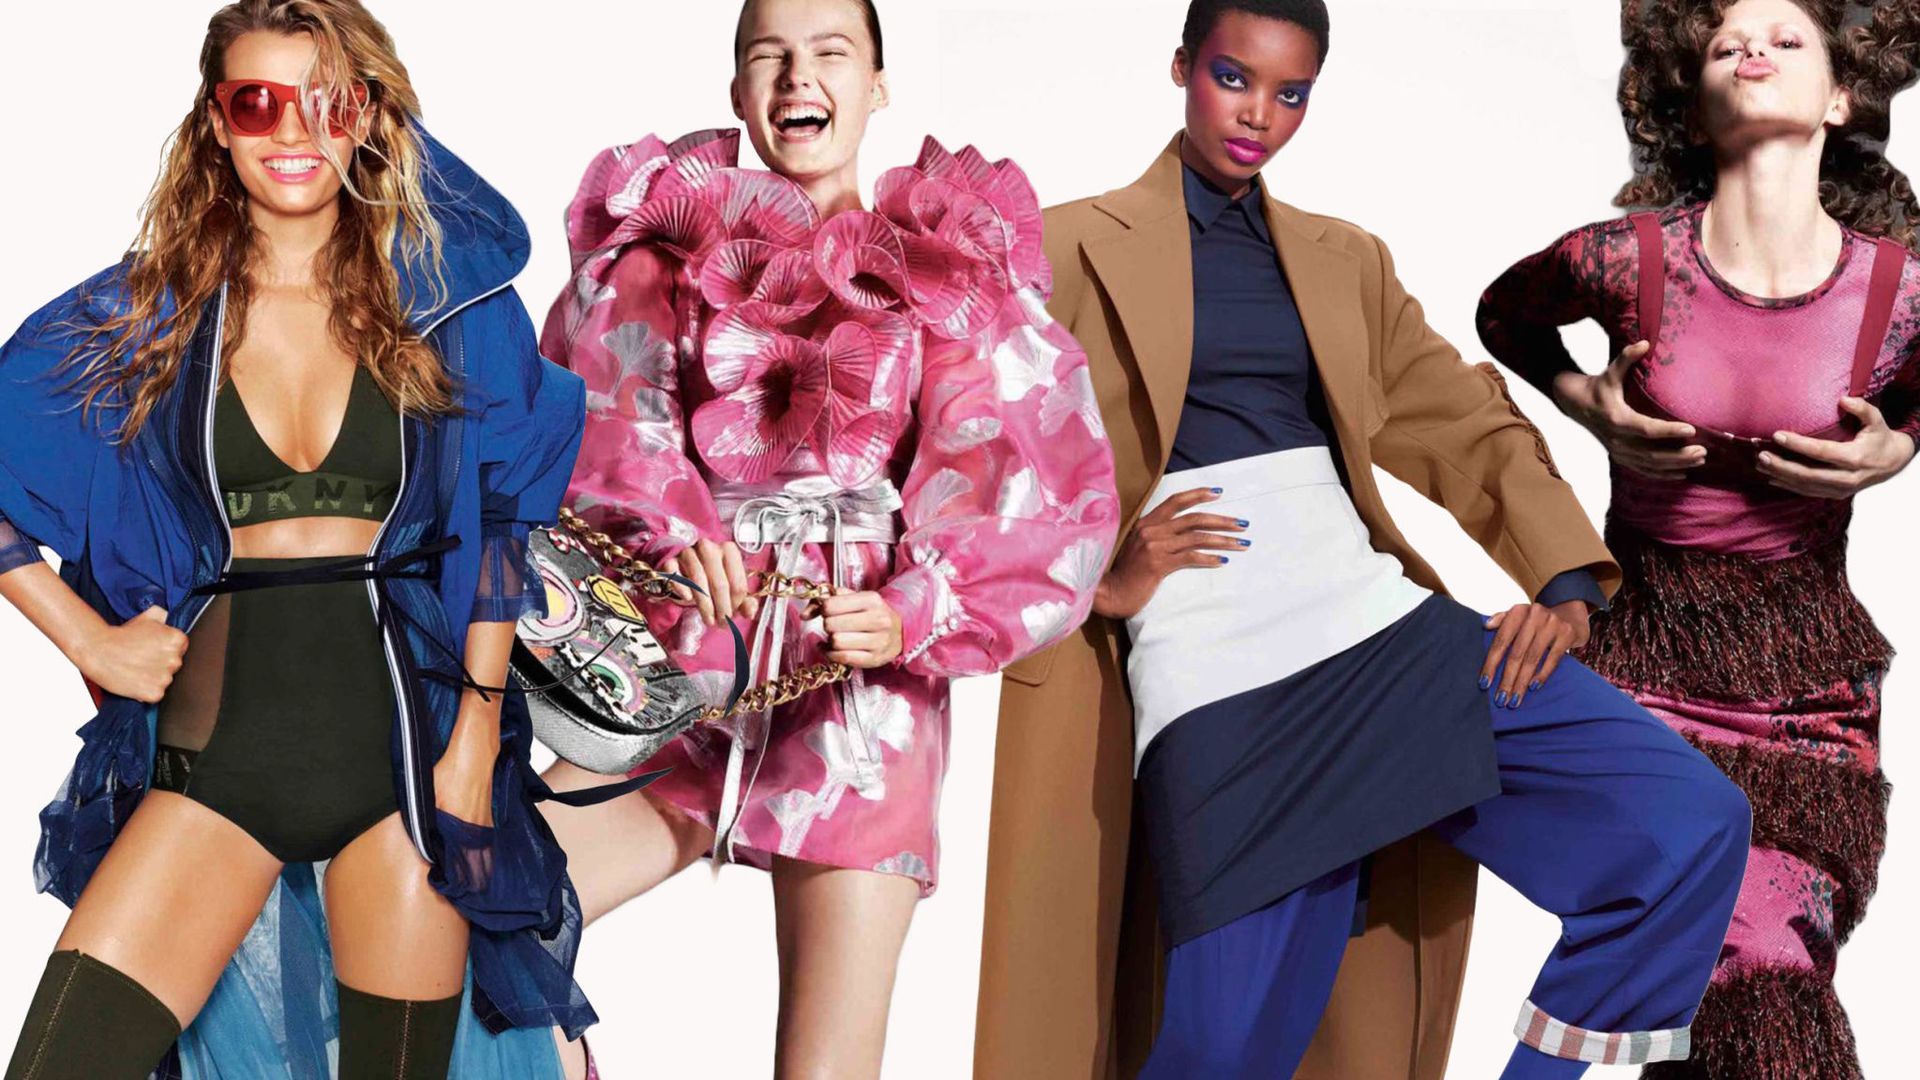 ELLE Fashion Portfolio: How to Get Dressed Now